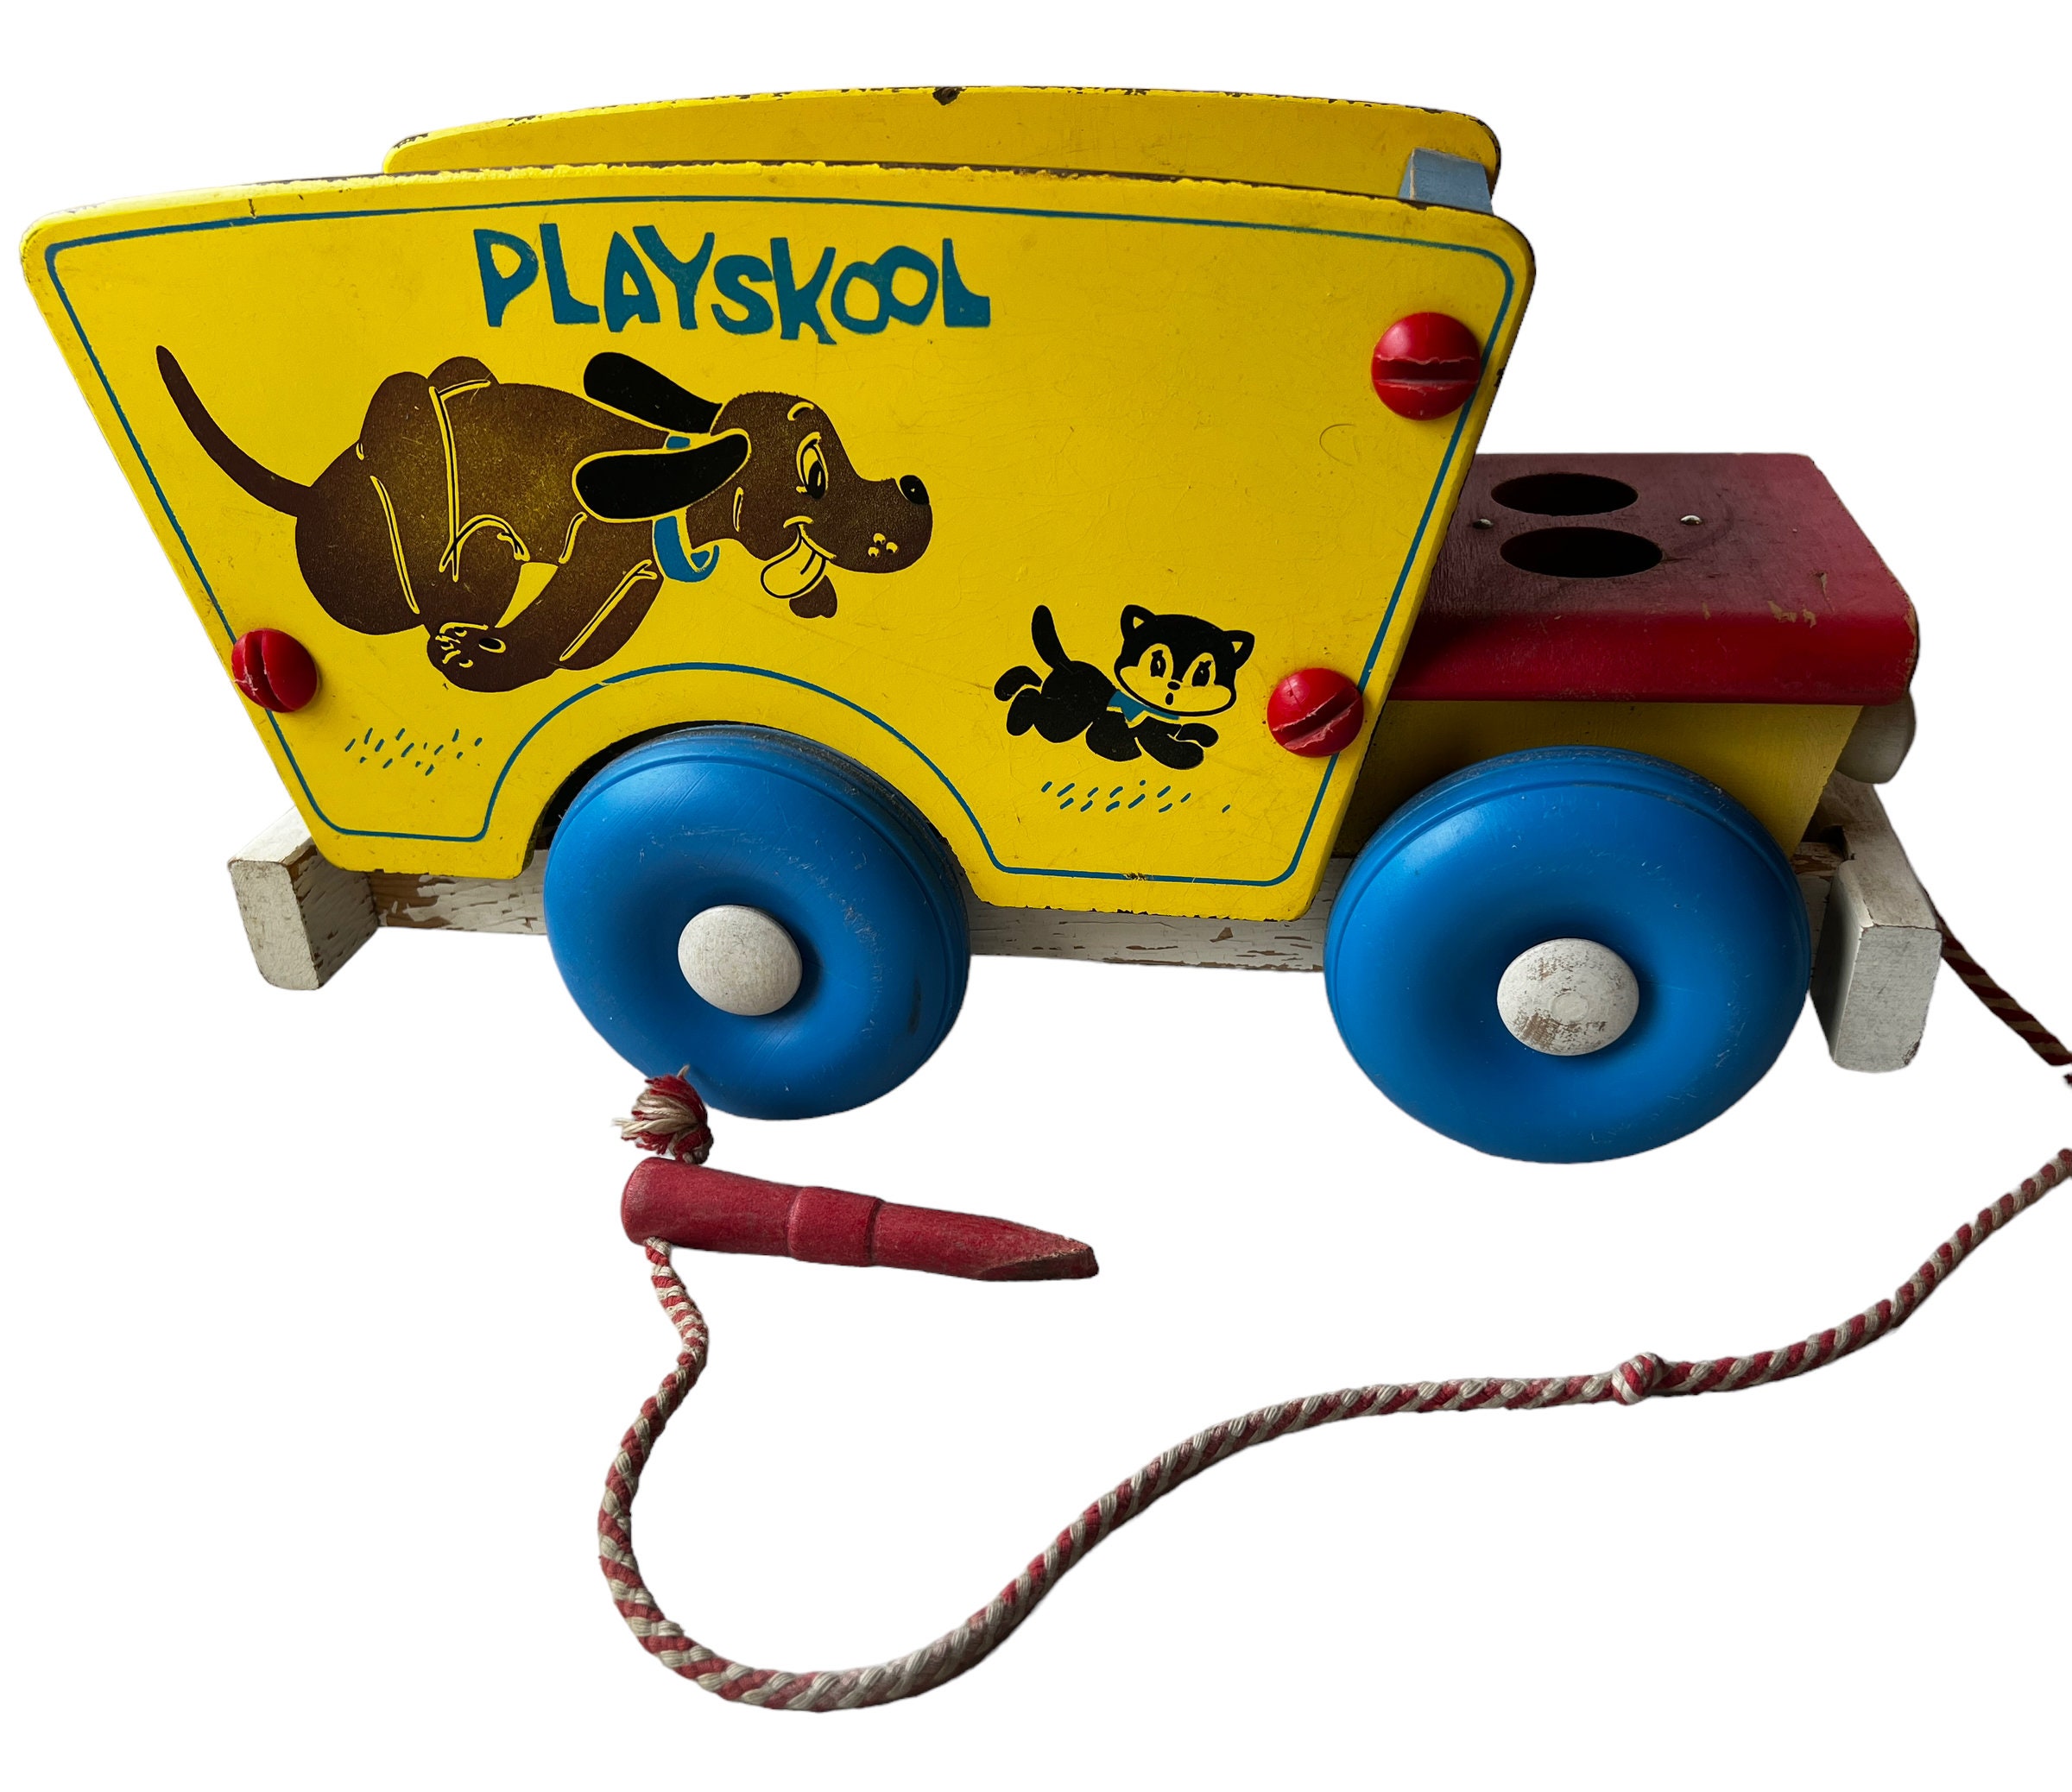  Playskool Clipo Vehicle Mini Bucket : Toys & Games